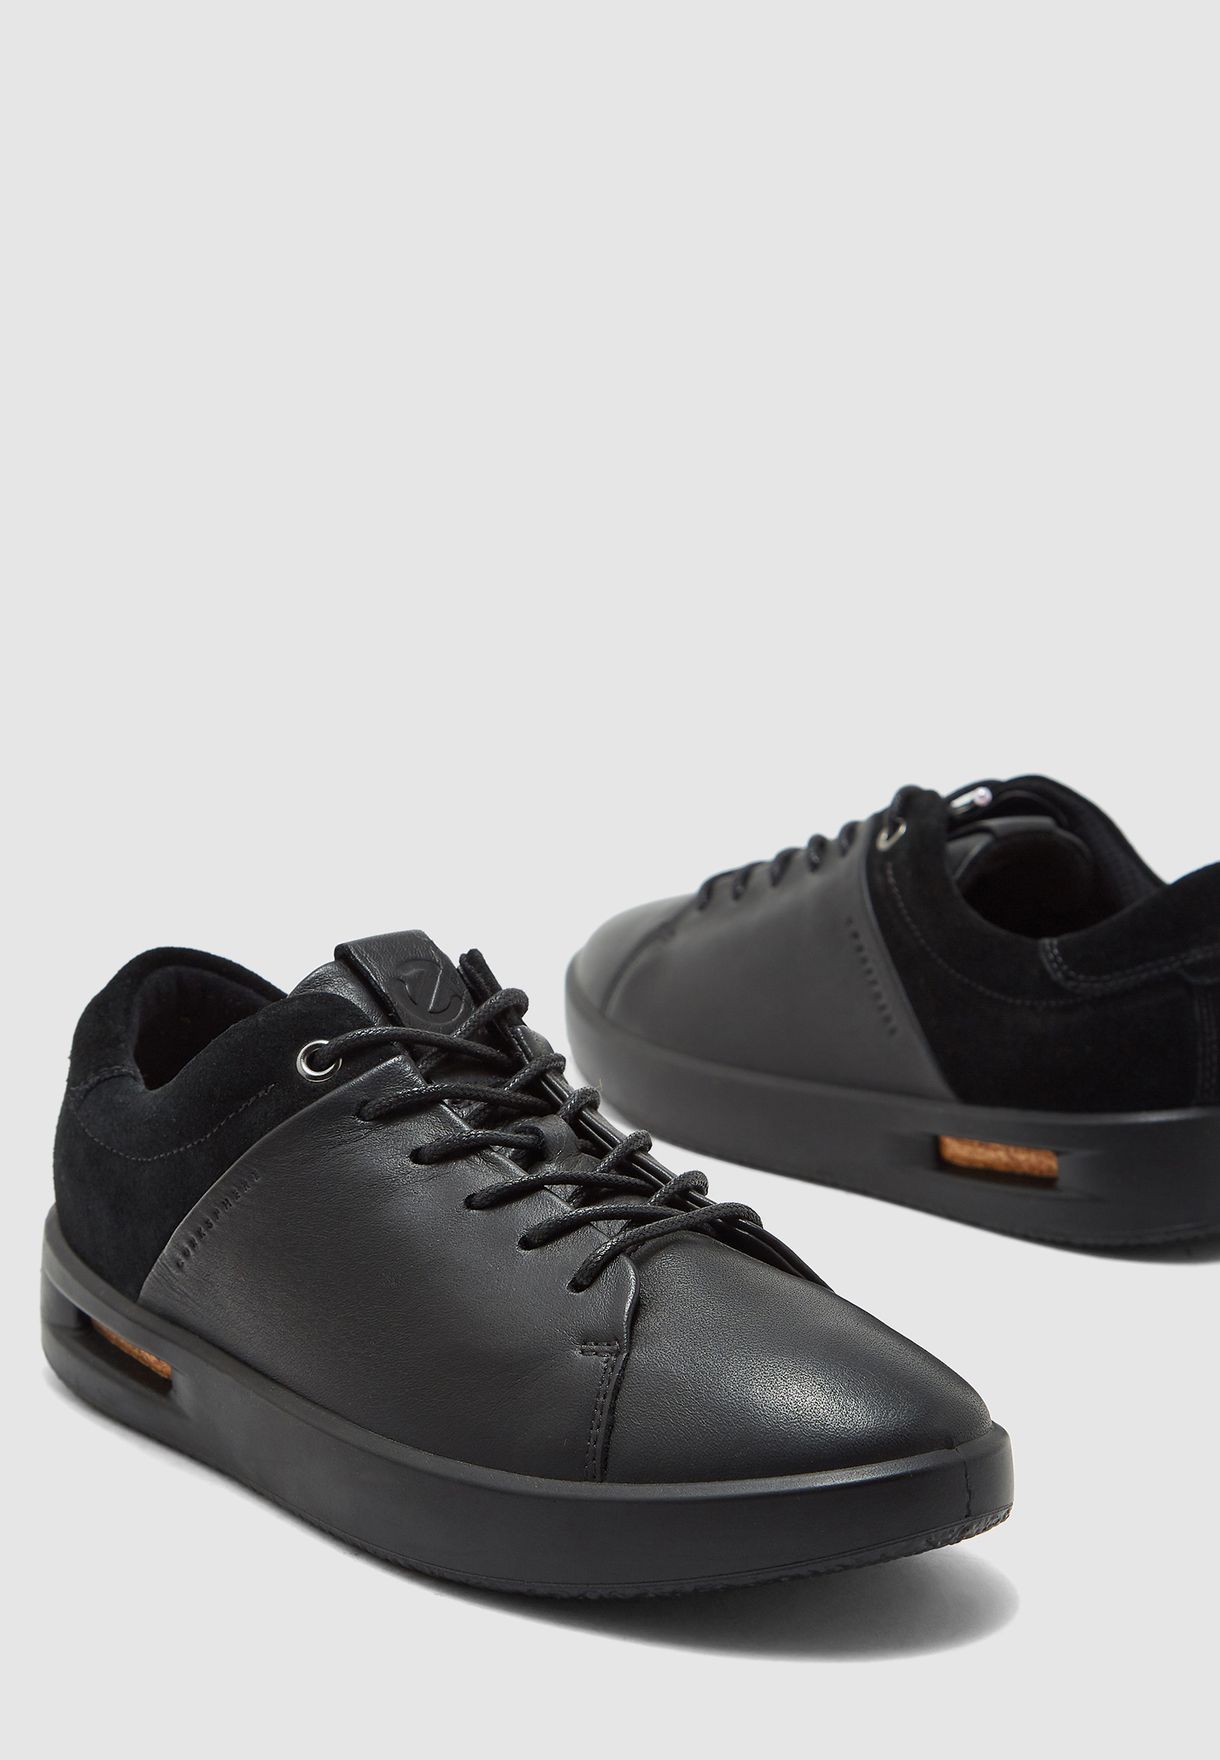 Buy Ecco Black Low Top Sneaker for 